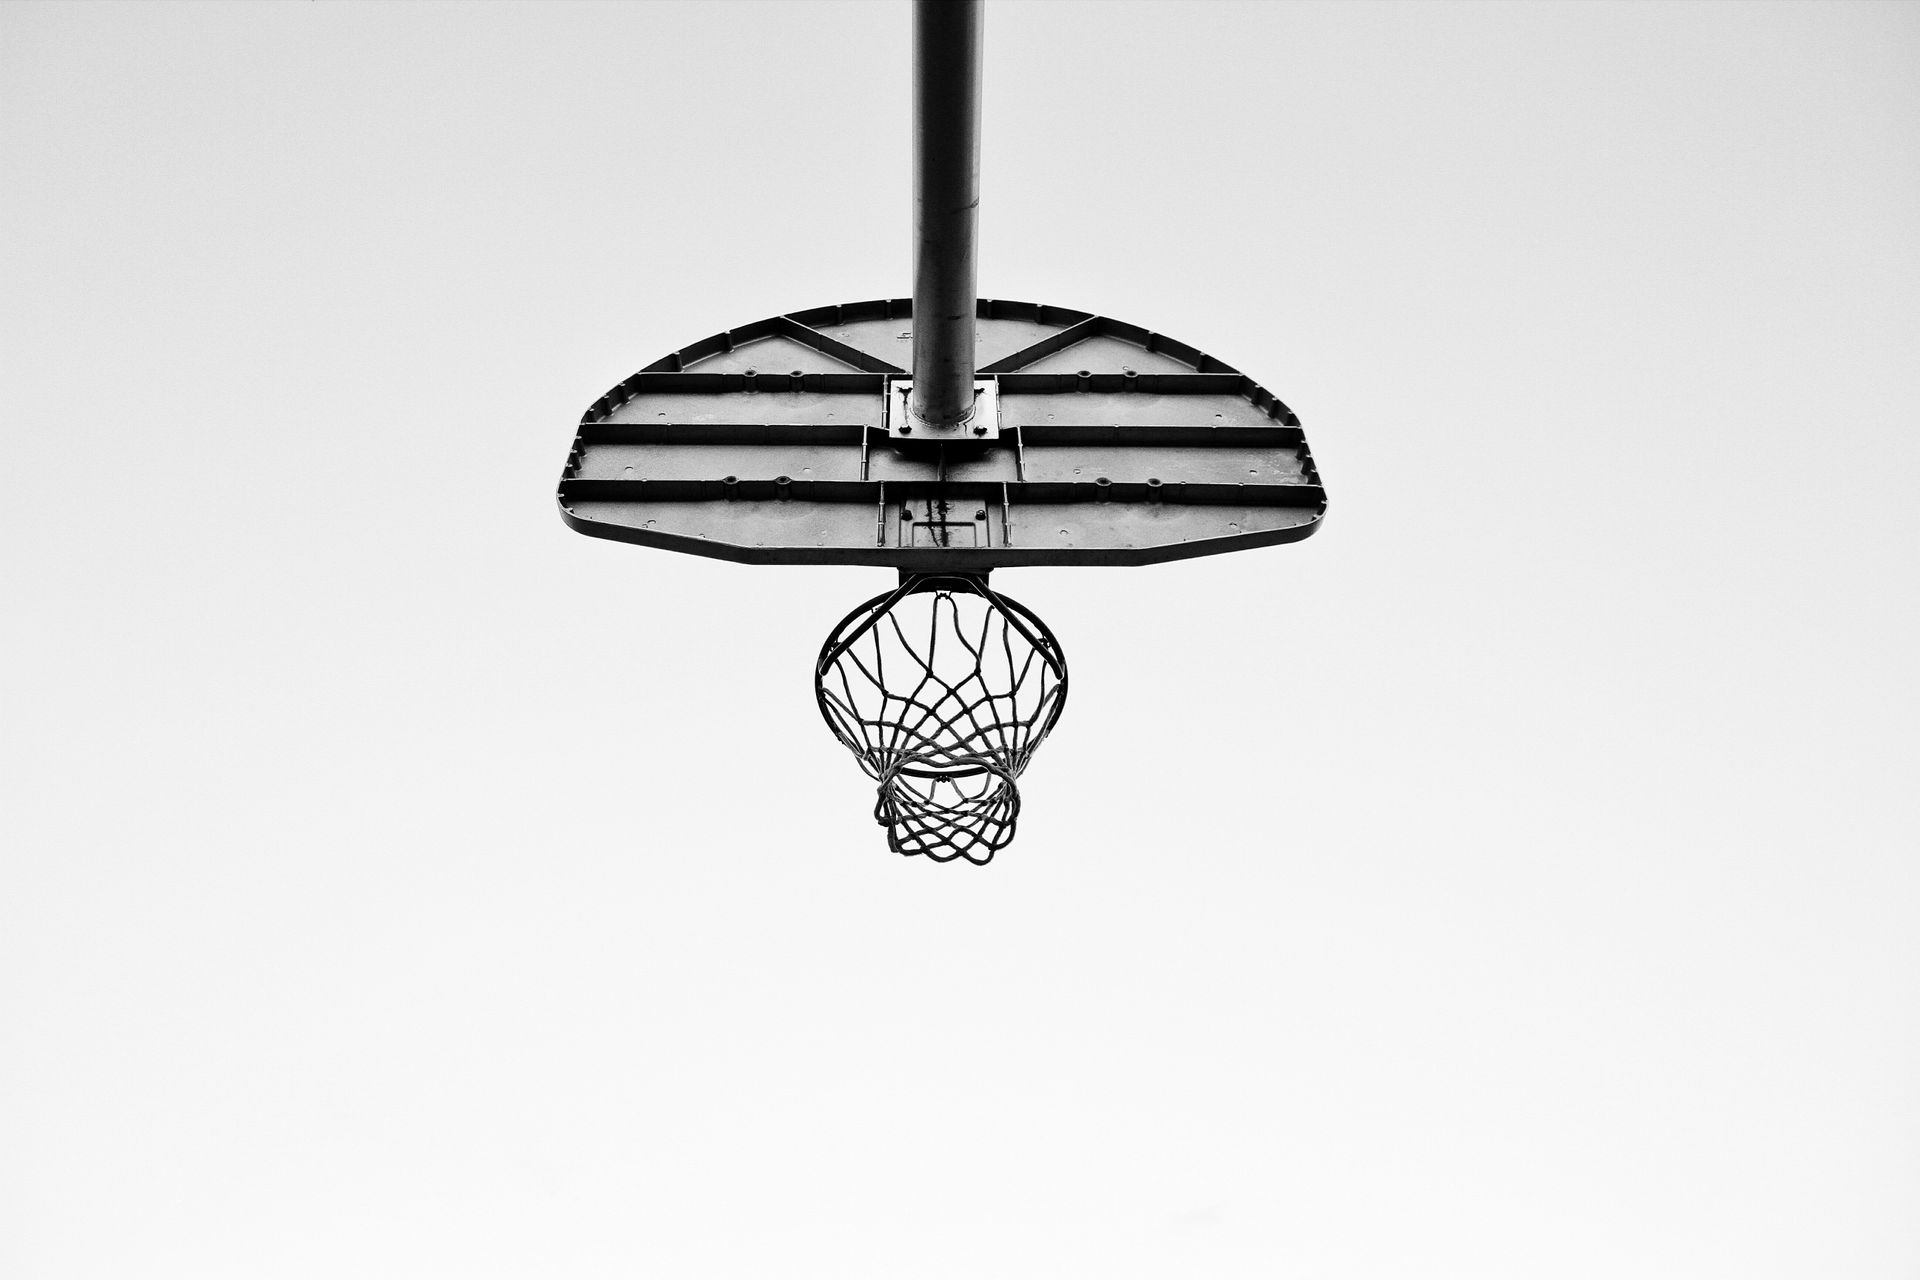 Black Metal basketball hoop. By MontyLov (https://unsplash.com/@montylov) on Unsplash.